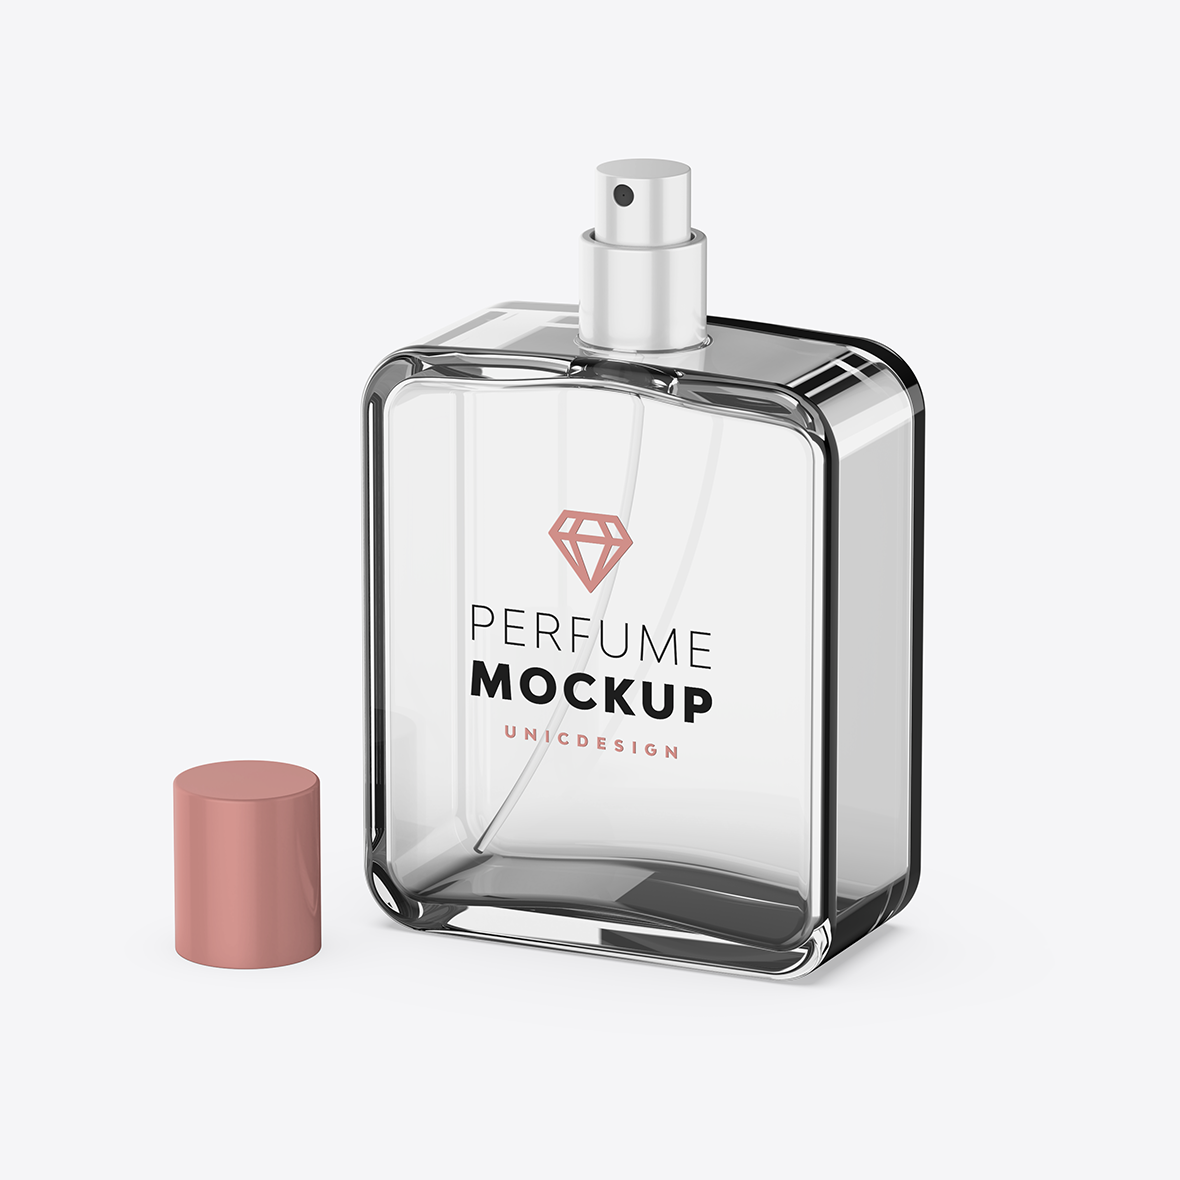 Perfume Mockup